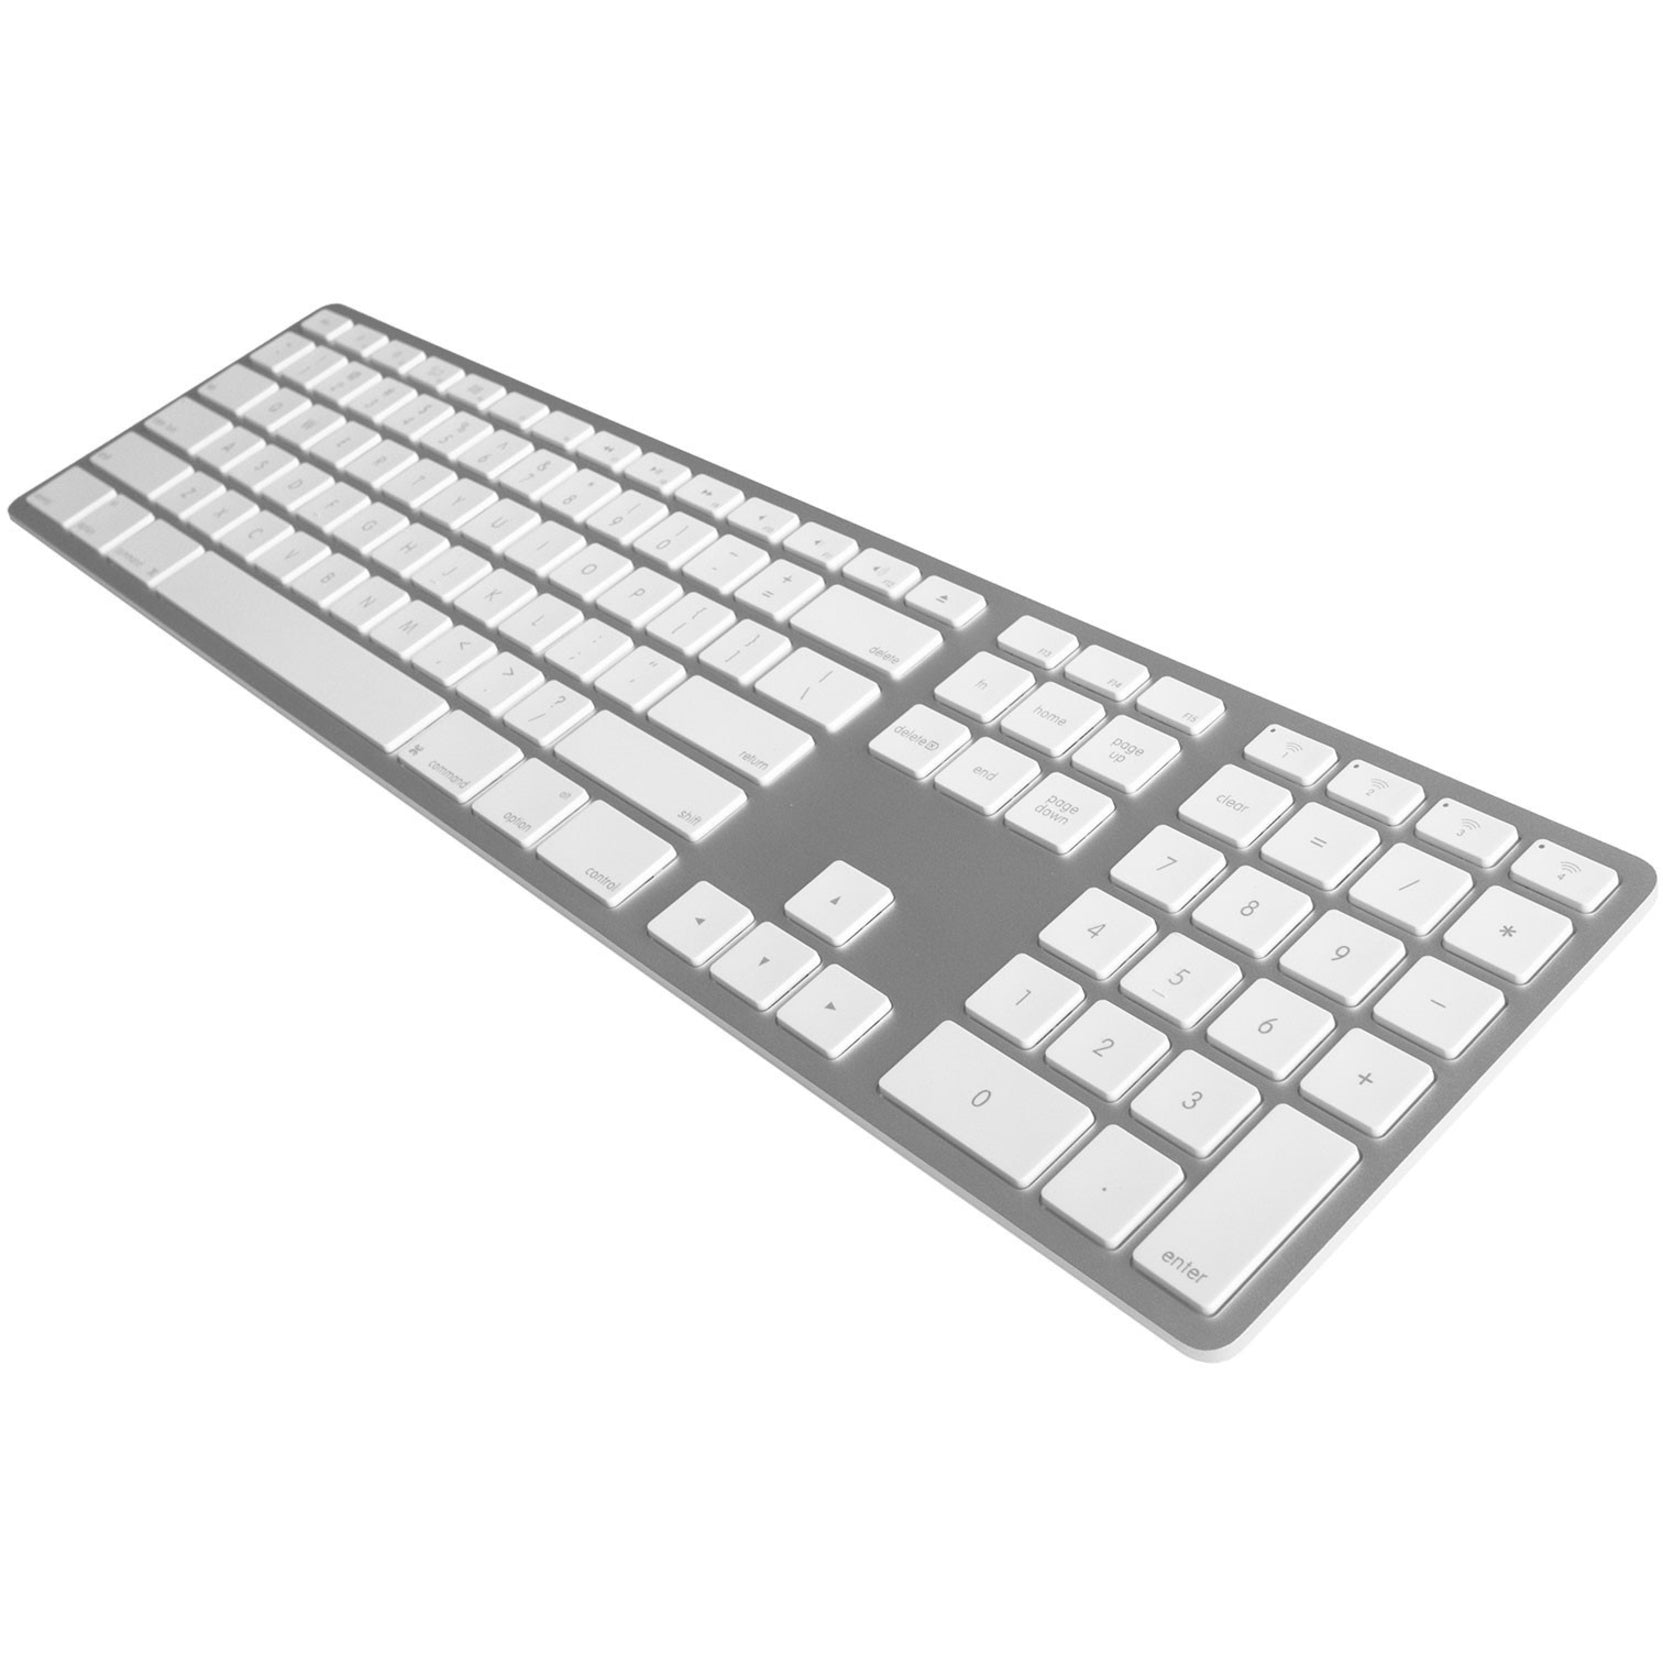 Matias FK418BTS Wireless (Bluetooth) Aluminum Keyboard, Silver - English (US) QWERTY Layout